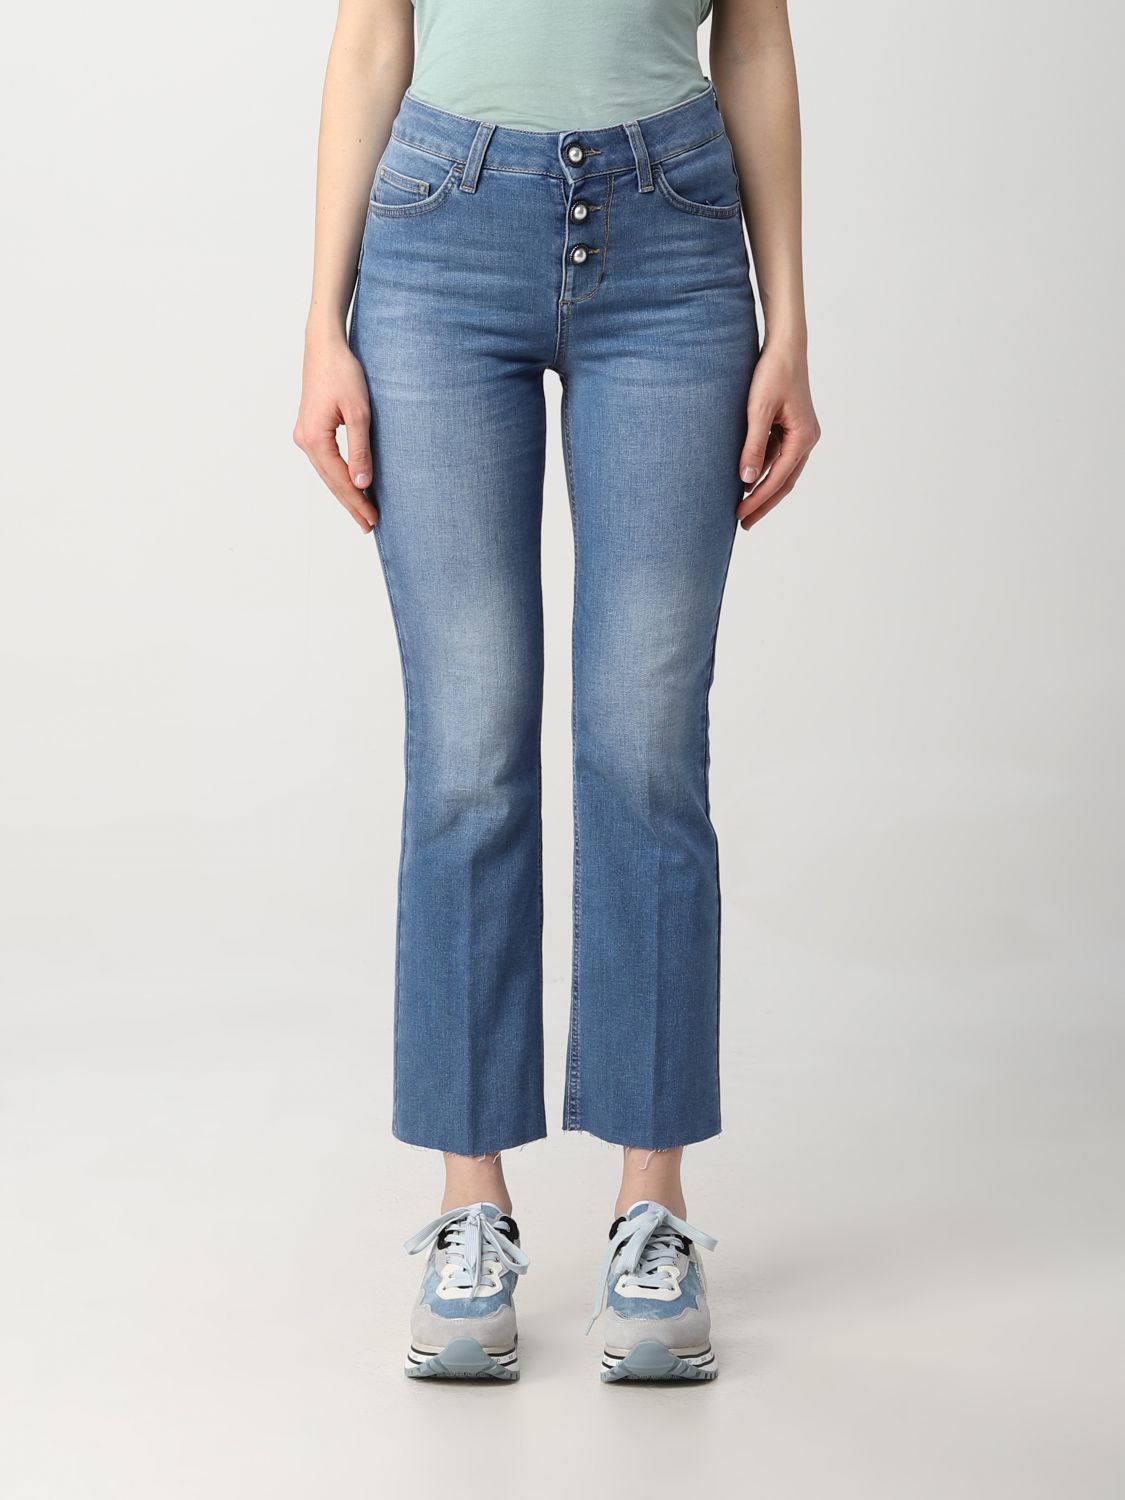 Modernisering rand Mondwater LIU JO: jeans for woman - Denim | Liu Jo jeans UA3113DS004 online on  GIGLIO.COM